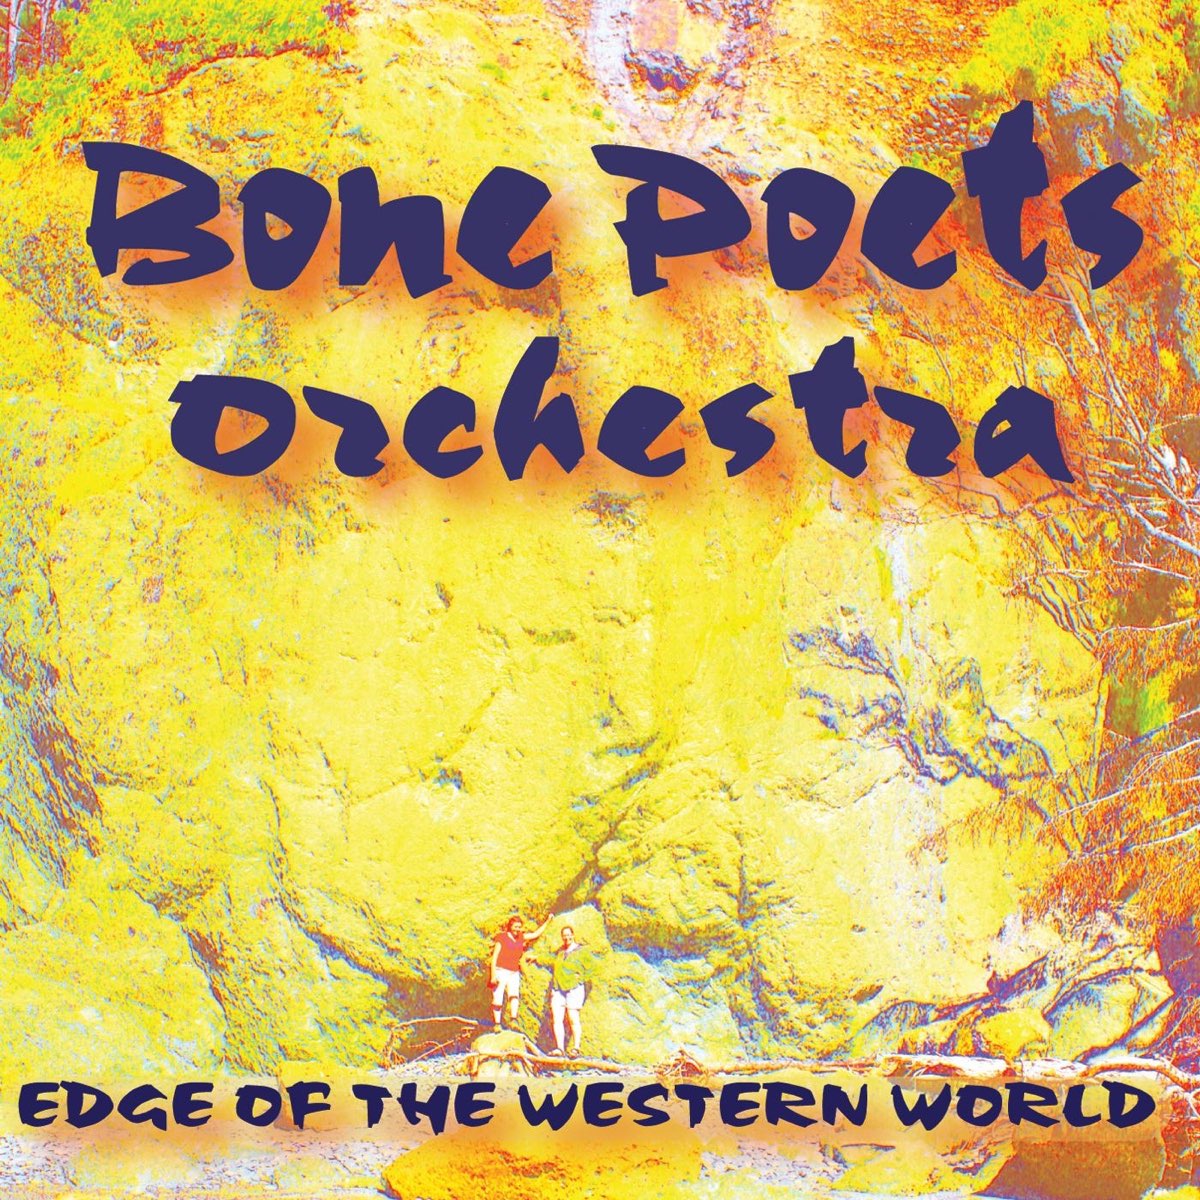 Bone world. Back from the Edge album. To the Bone кто поет.